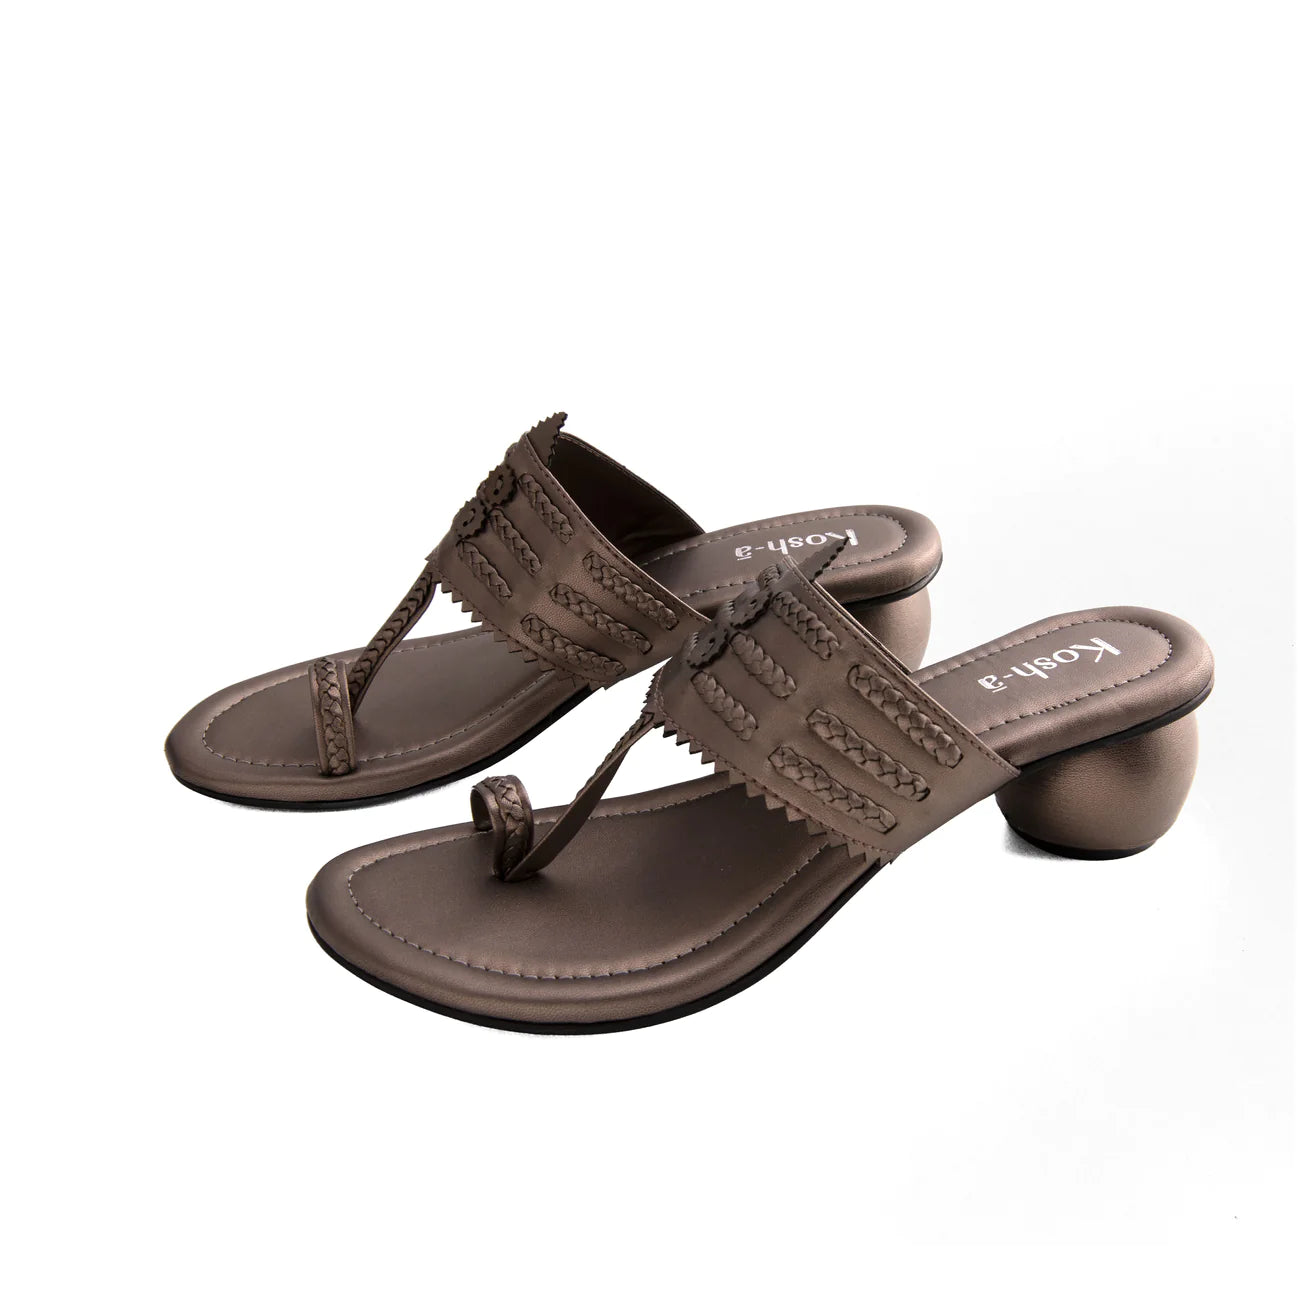 round heel sandals for women in USA